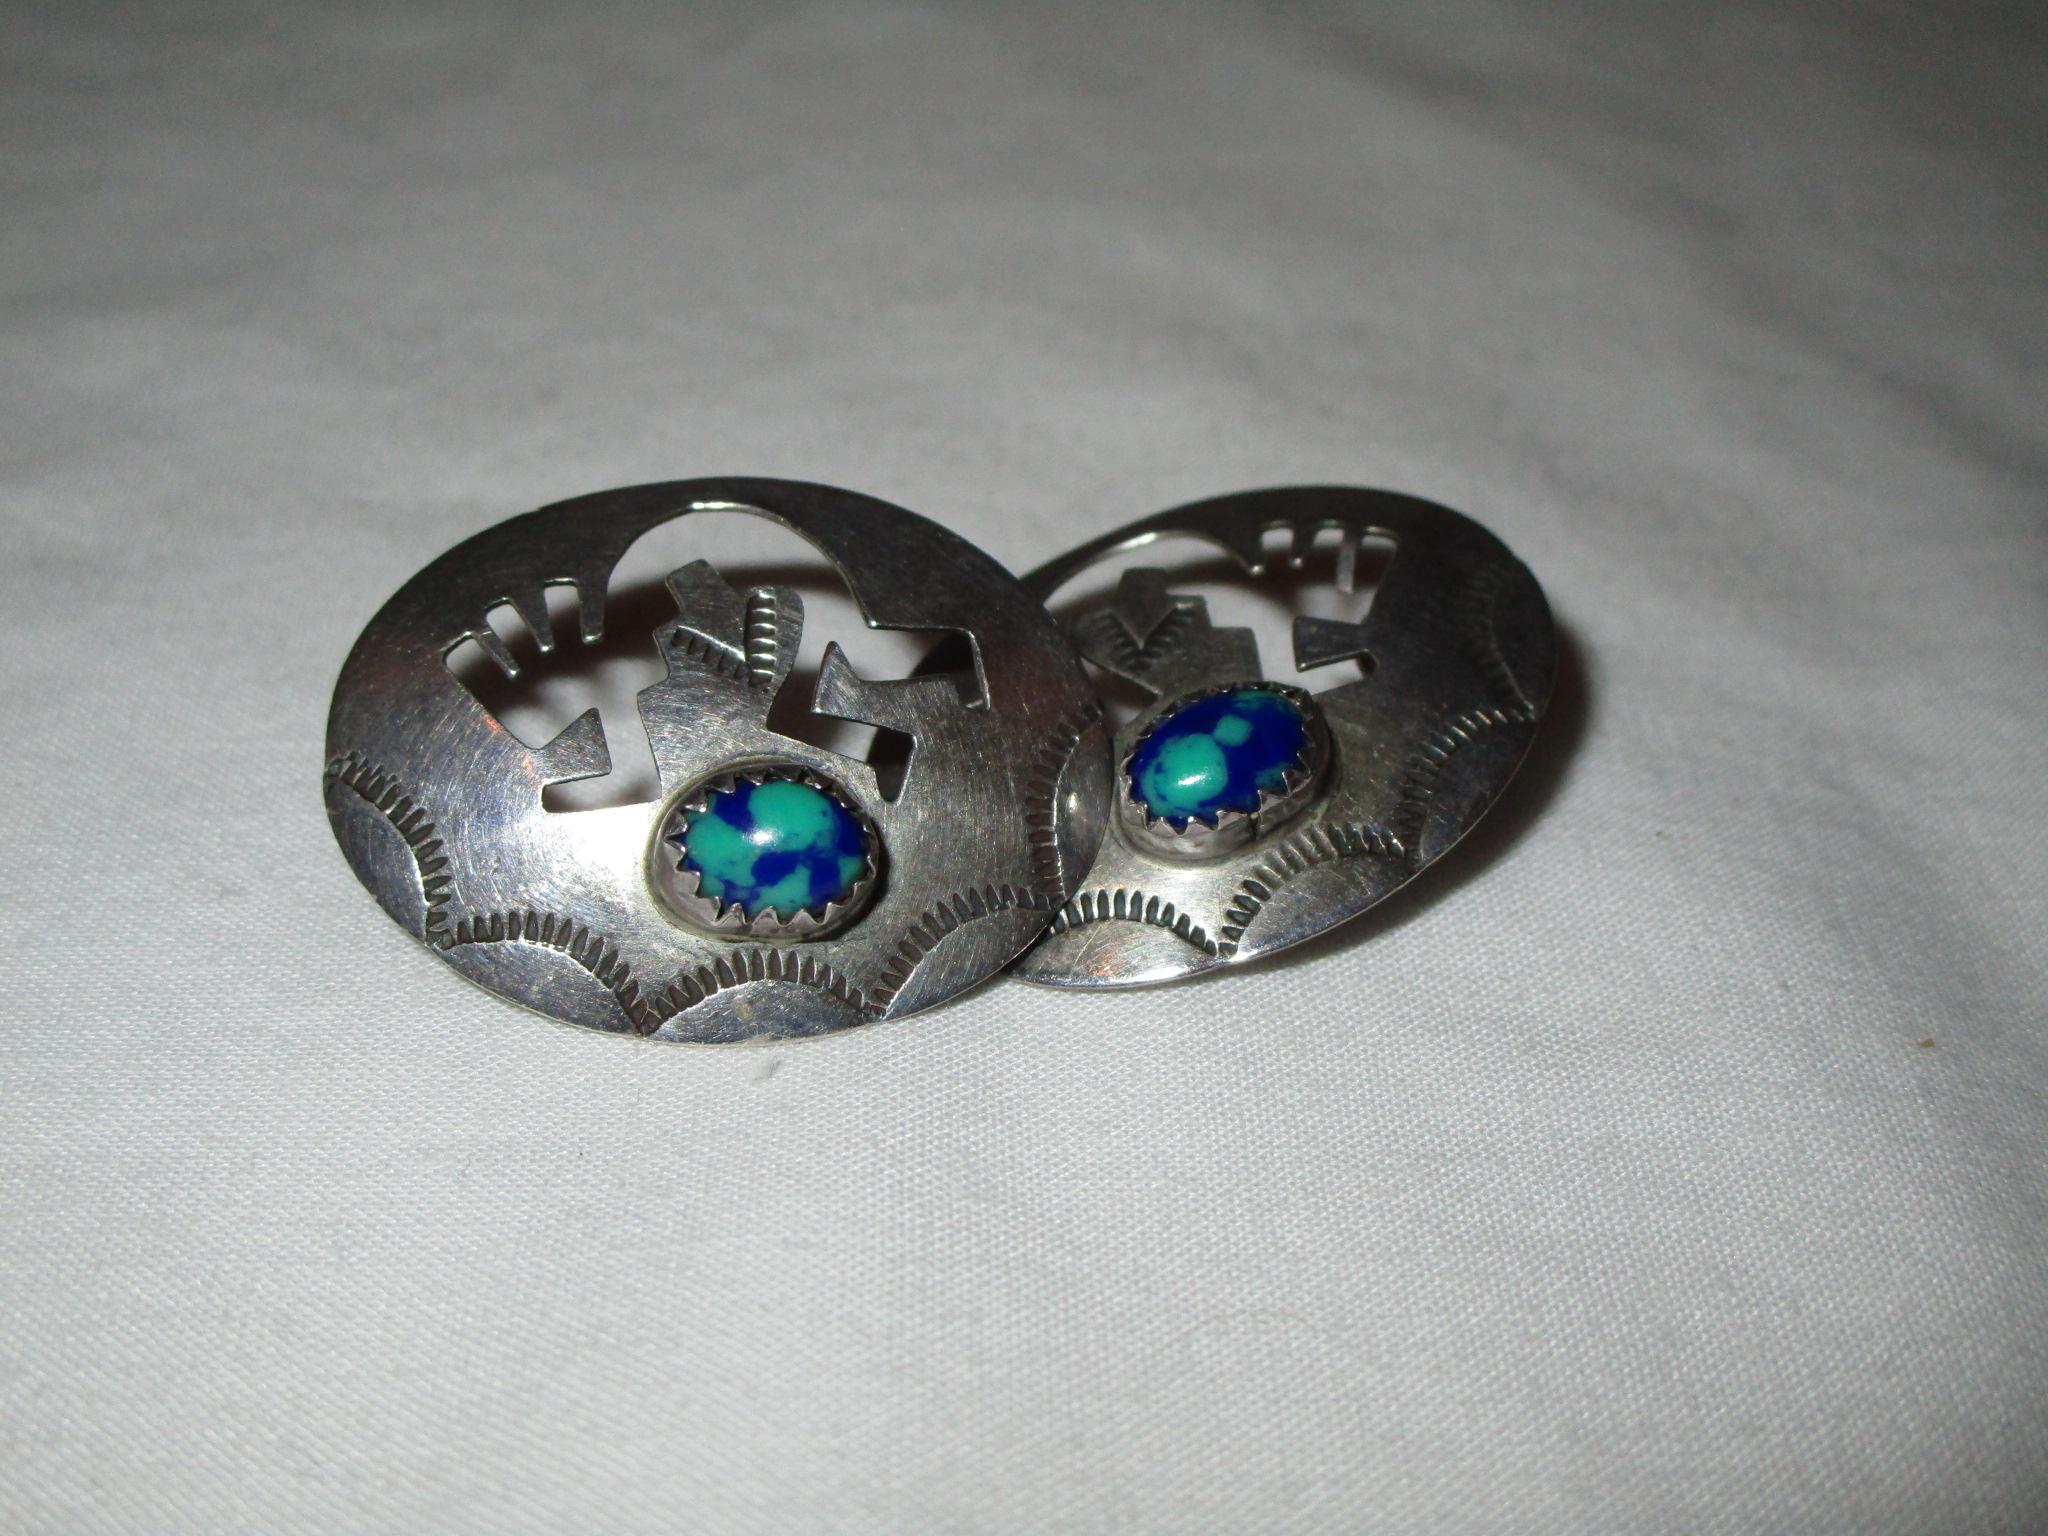 Pr. - Kokopelli Design Earrings w/ Turquoise Accents